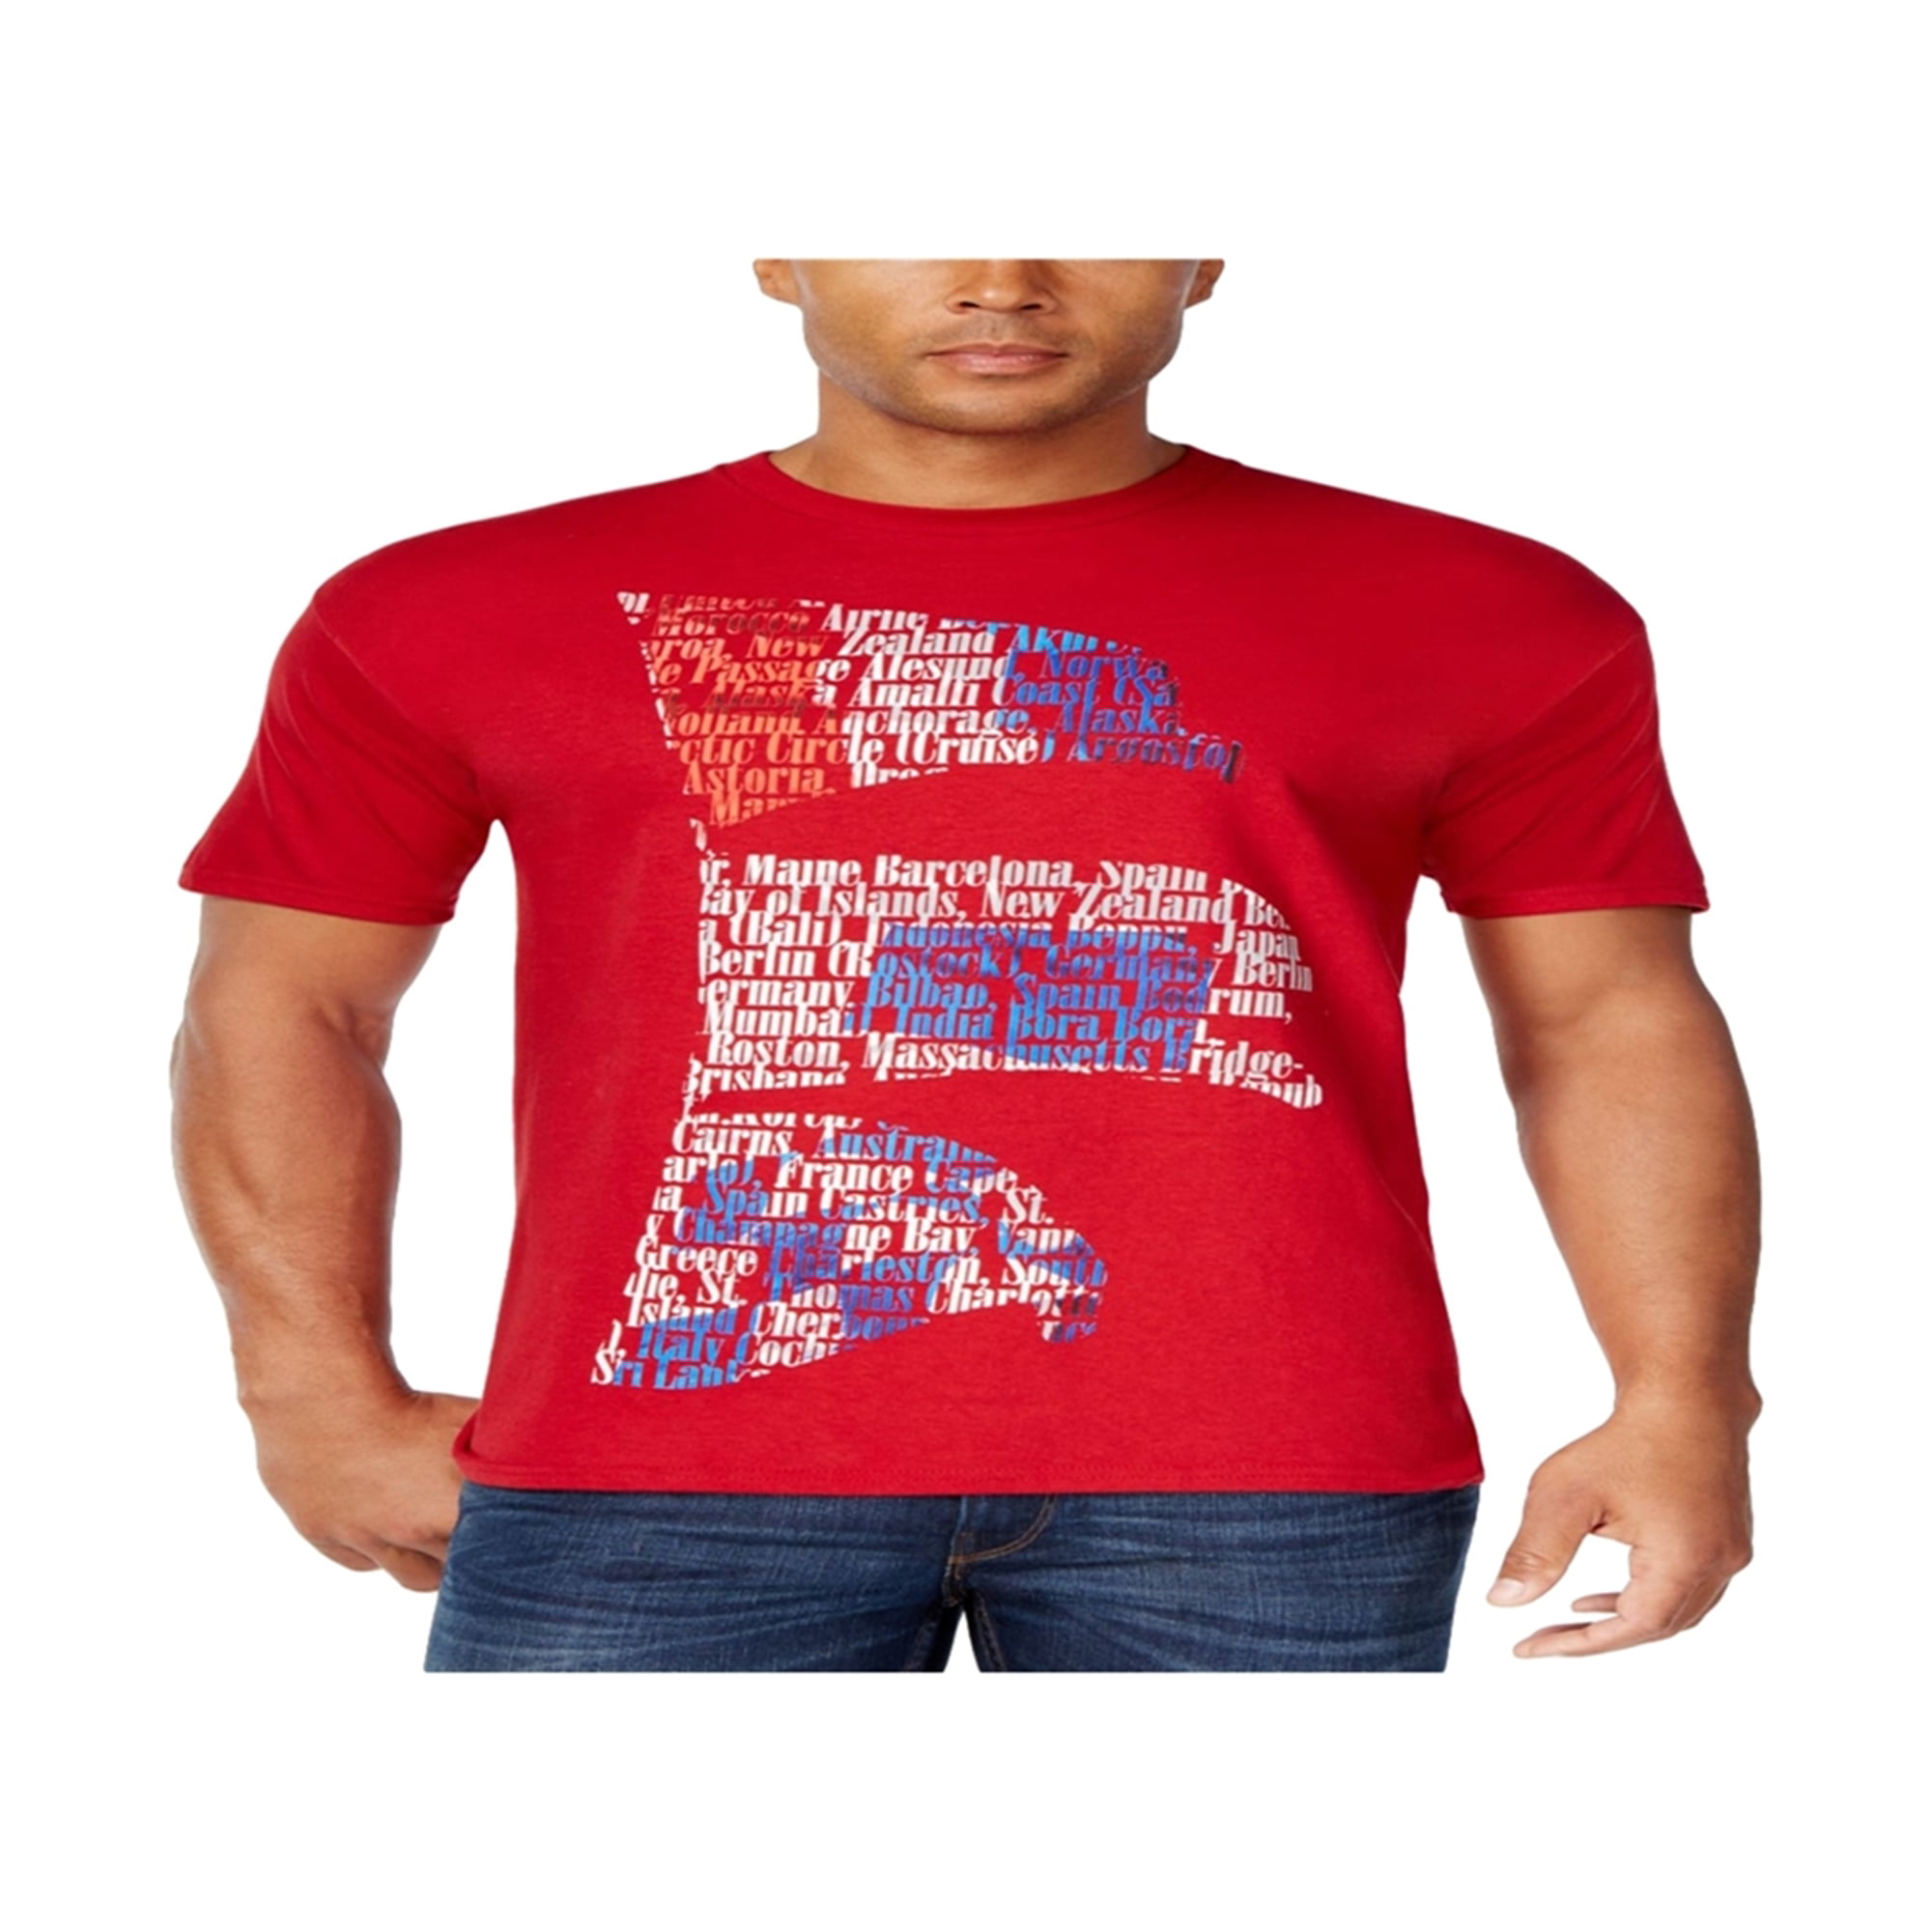 Club Room Mens Country Flag Graphic T-Shirt, Red, Medium